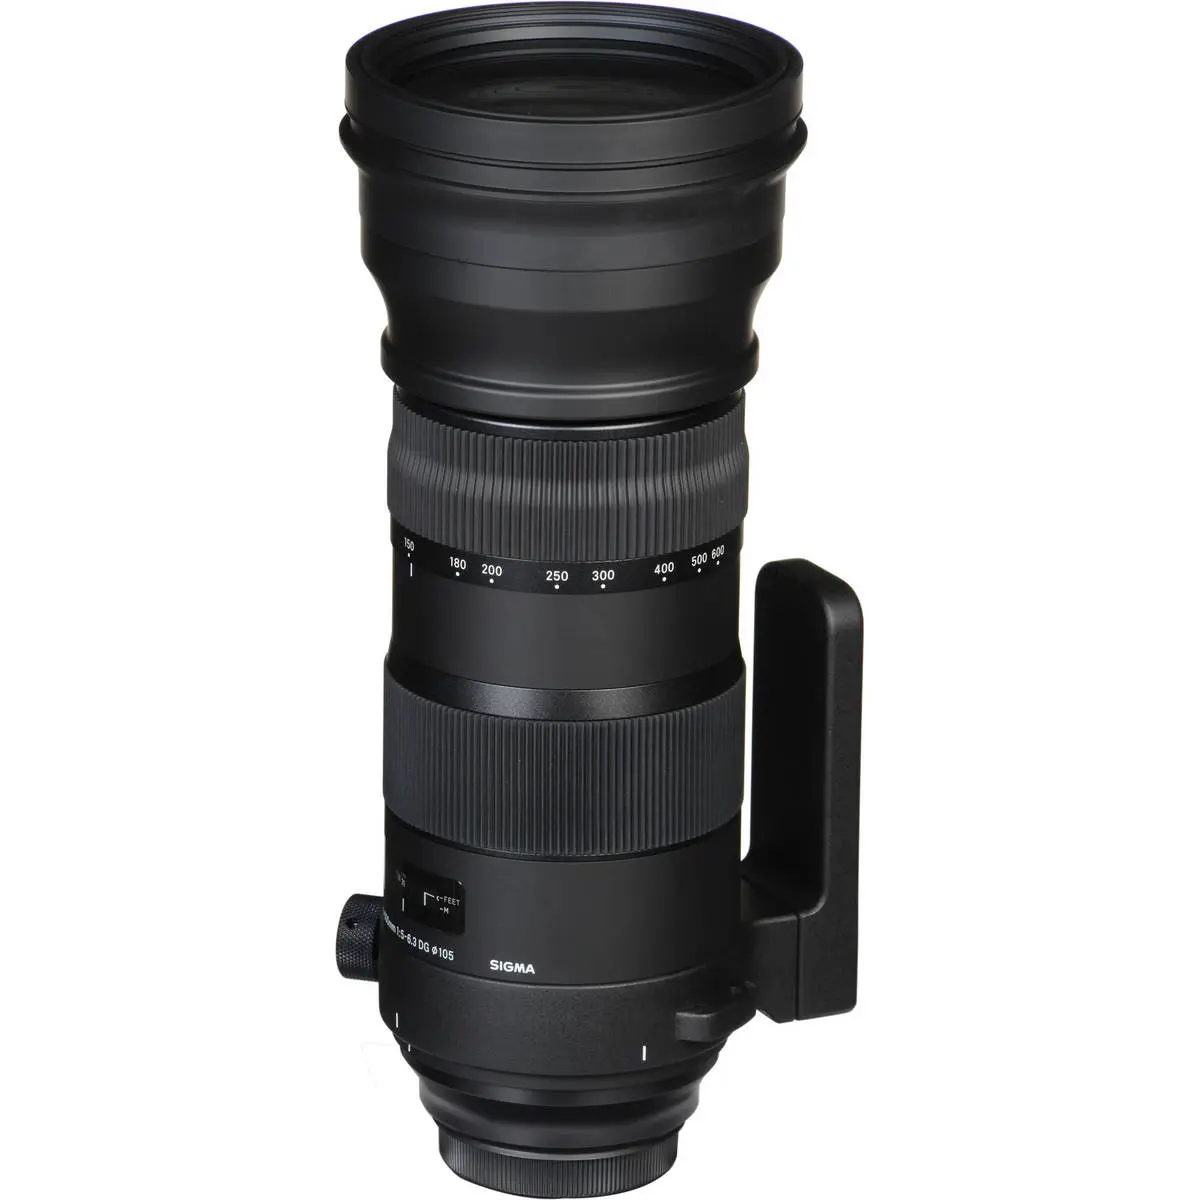 1. Sigma 150-600mm f/5-6.3 DG OS HSM | Sport (Nikon) Lens